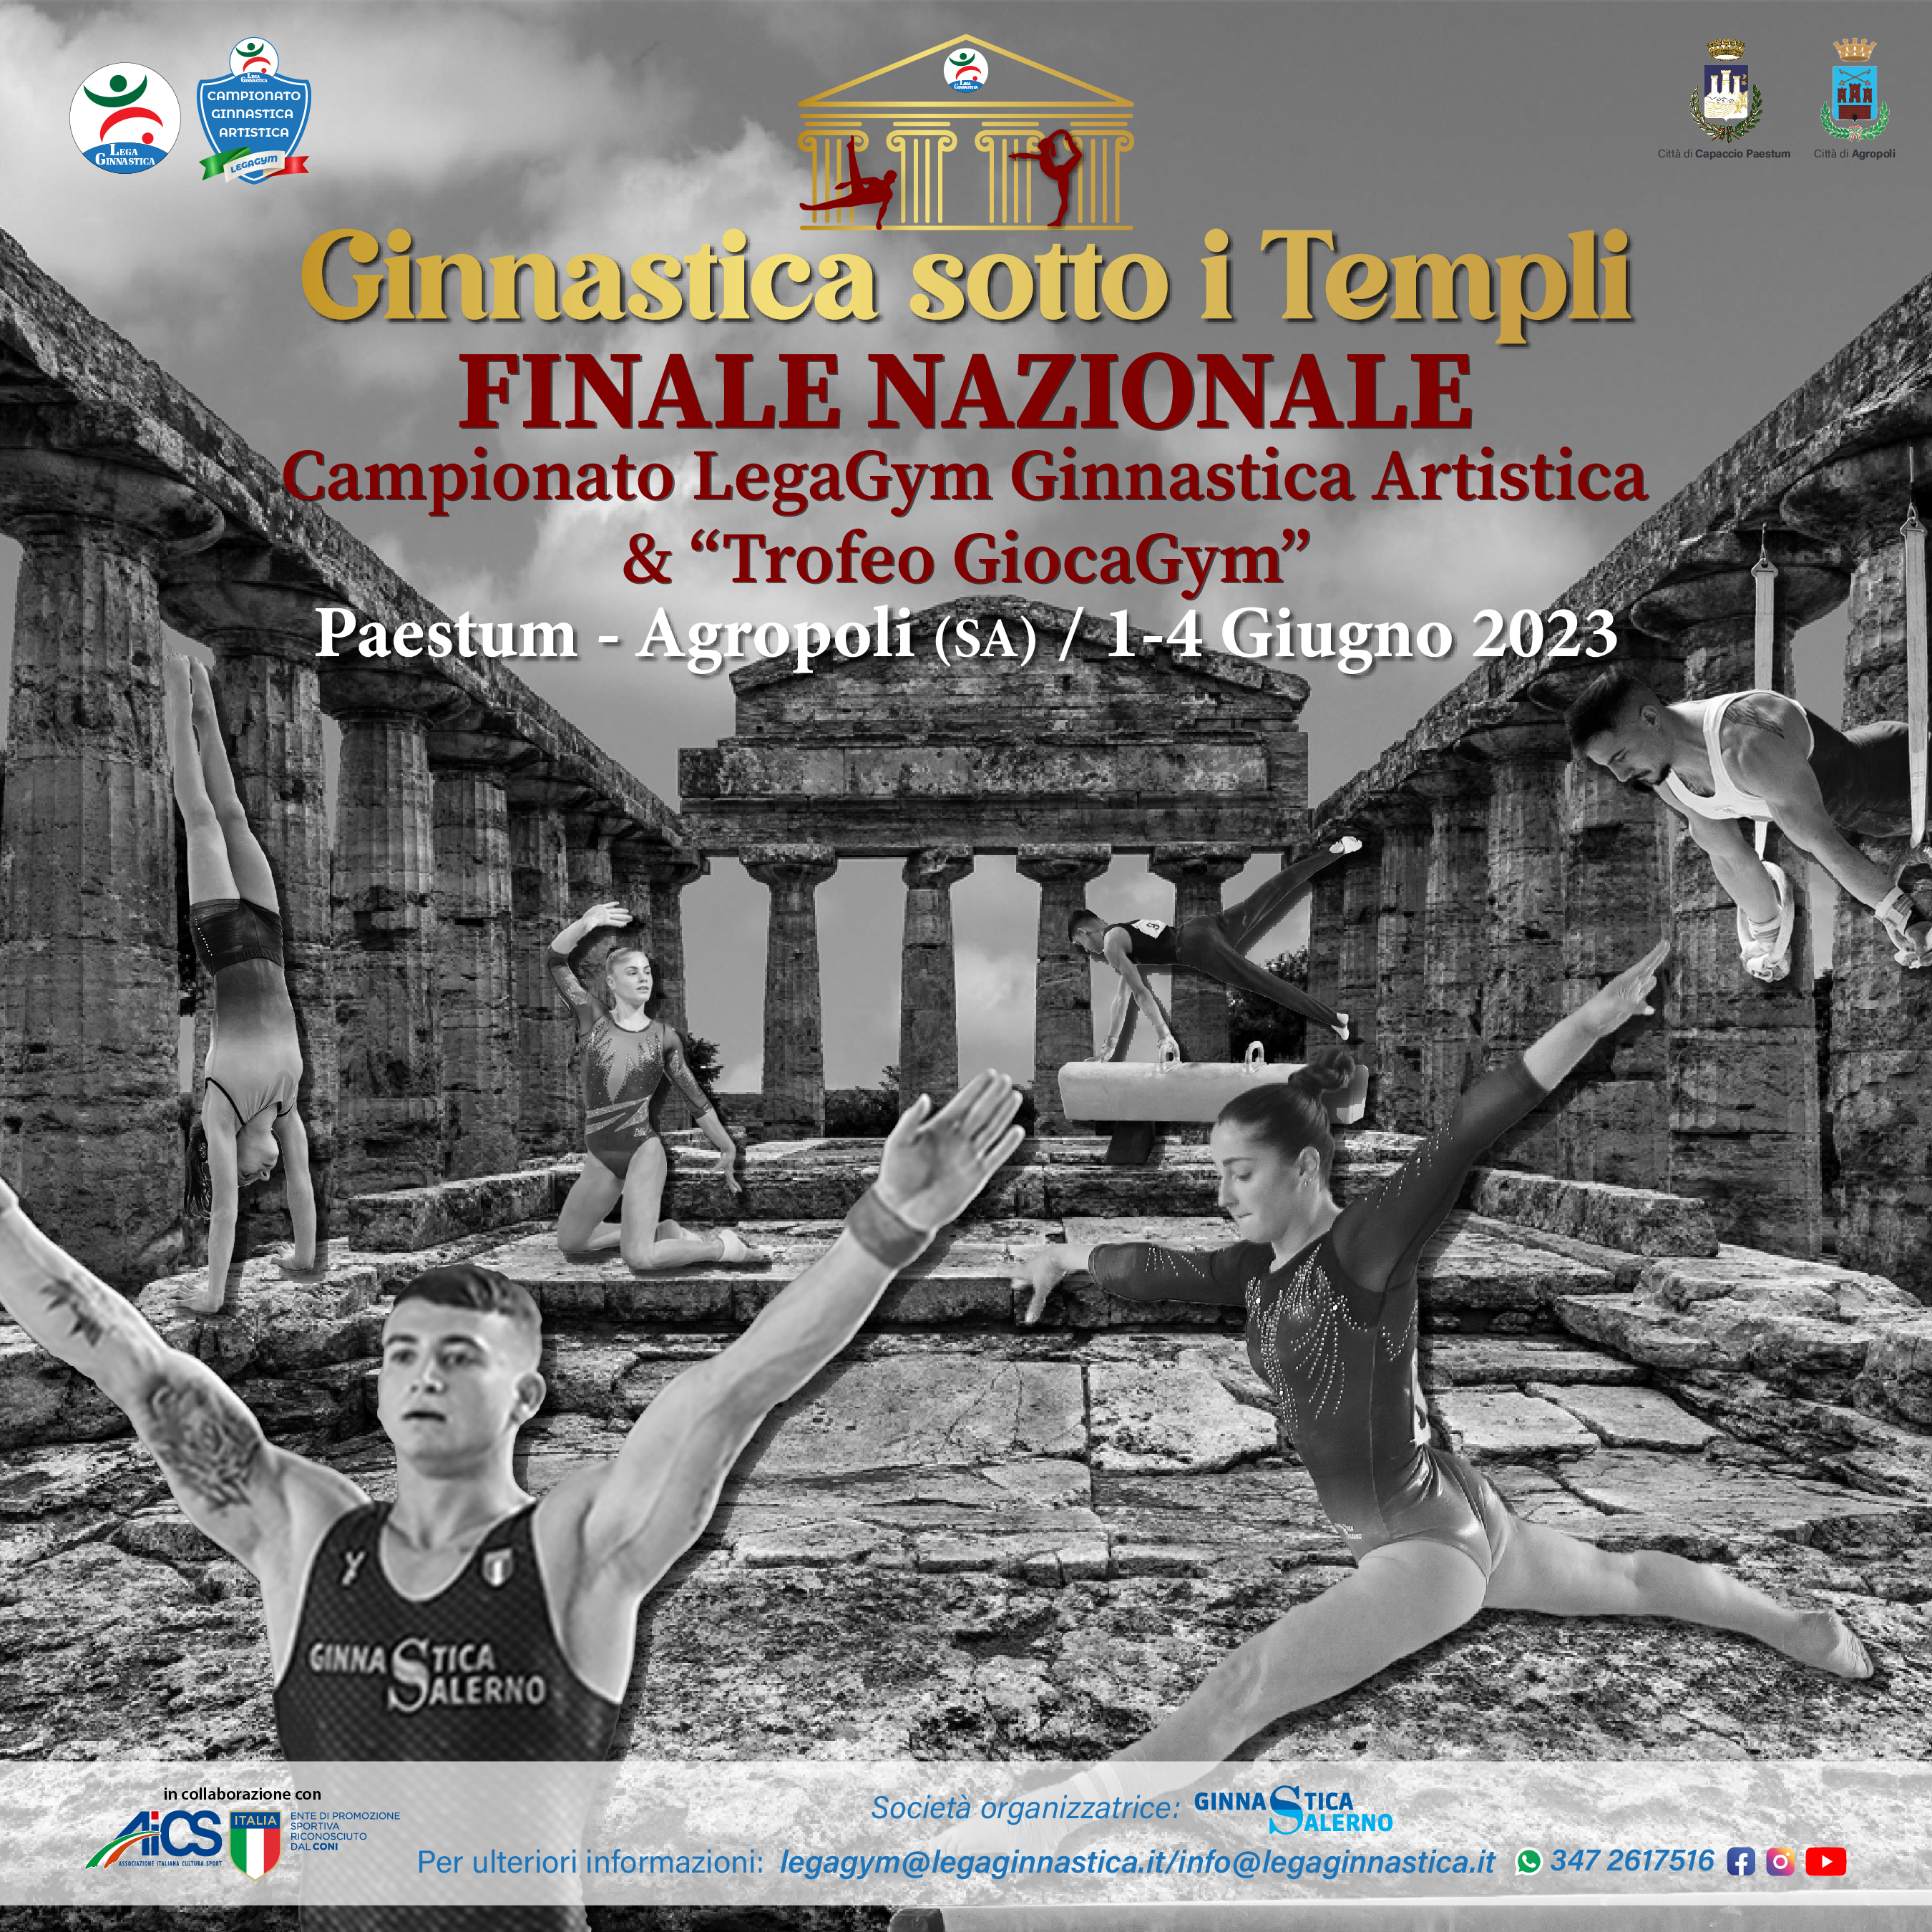 Finale Nazionale Campionato di Ginnastica Artistica LegaGym 2023 & “Trofeo GiocaGym”